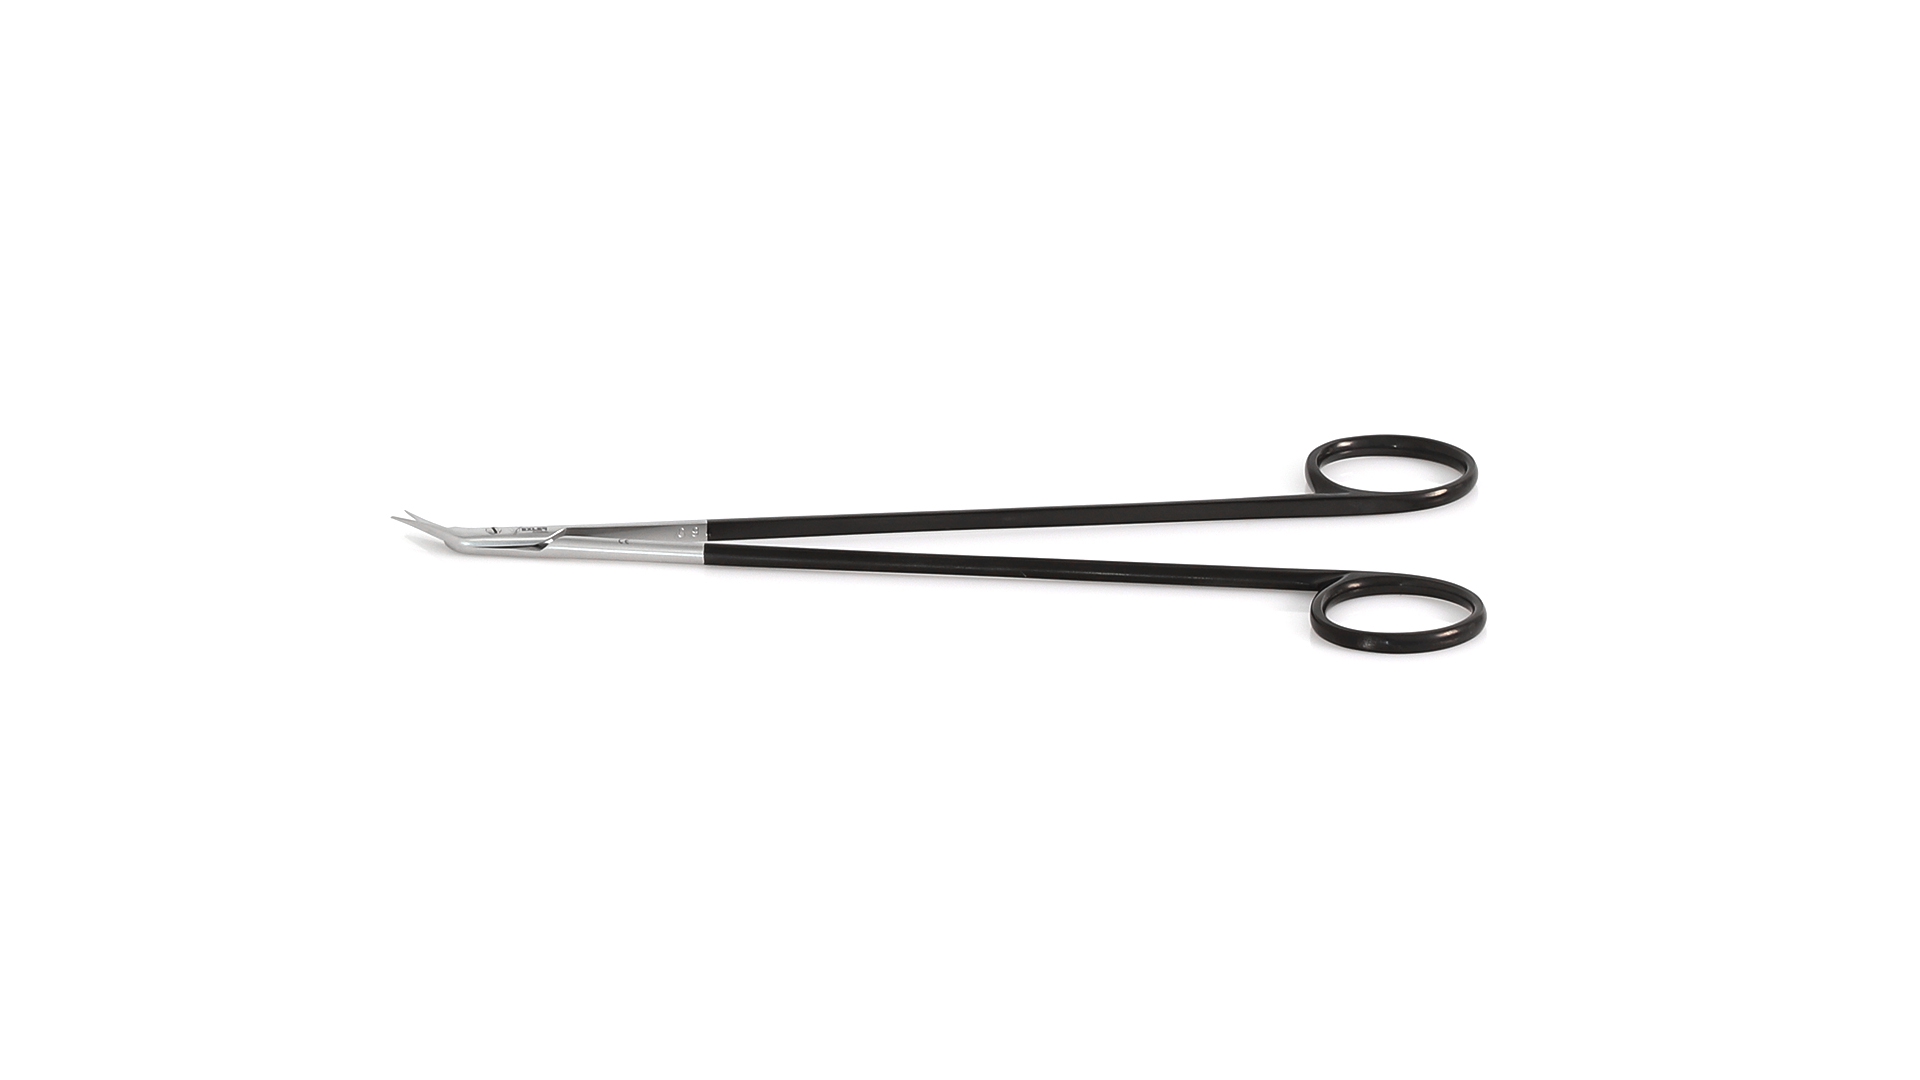 Diethrich-Potts Scissors - 45° Angled Razor edge Blades